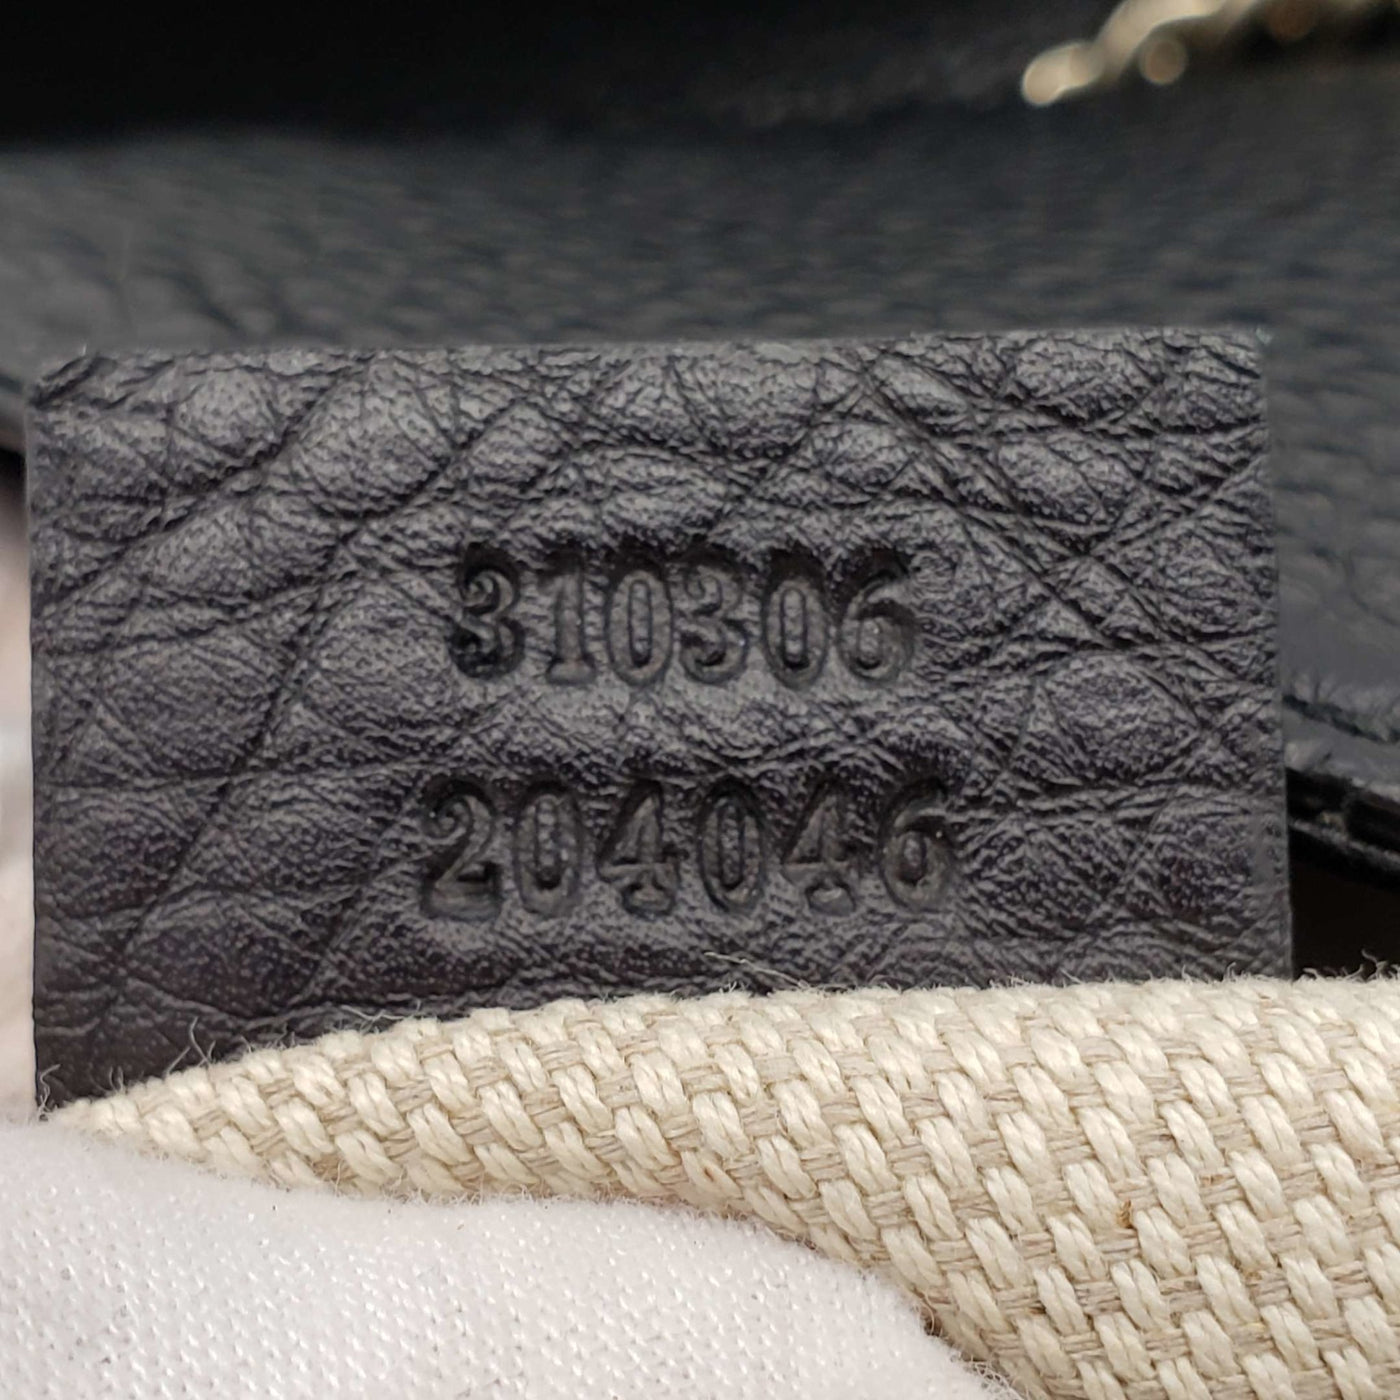 Gucci Soho Large Black Shoulder Bag - Luxury Cheaper